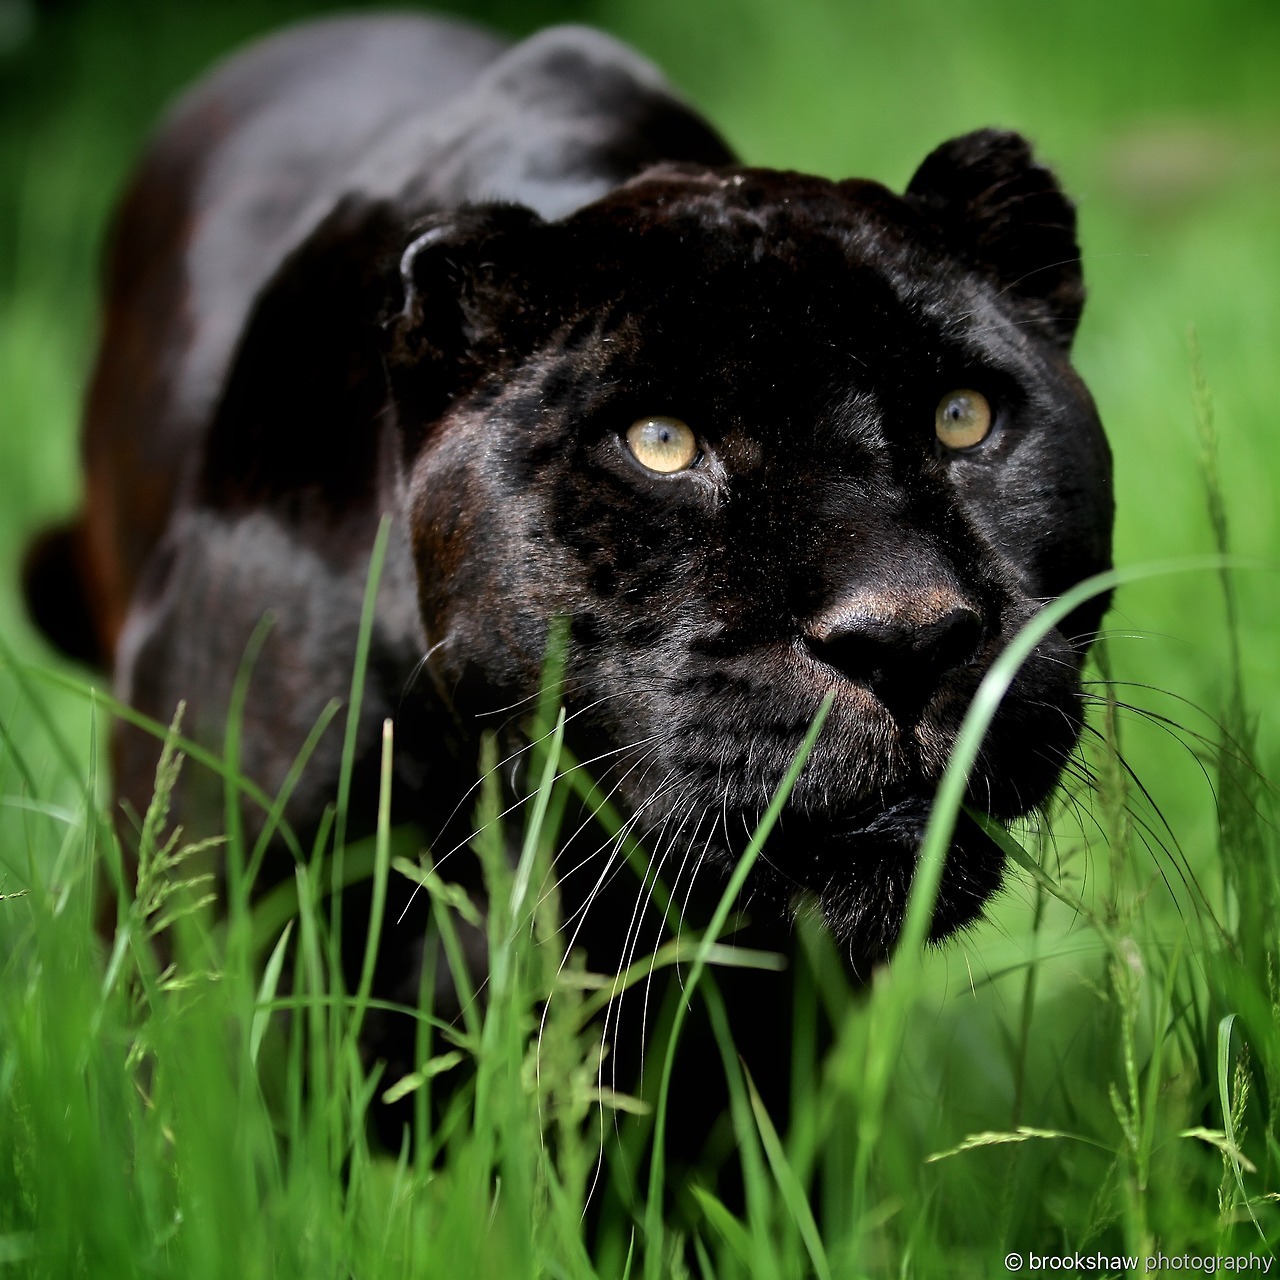 brookshawphotography:
“An extreme close-up of the stunning Black Jaguar named Athena at The Big Cat Sanctuary!
”